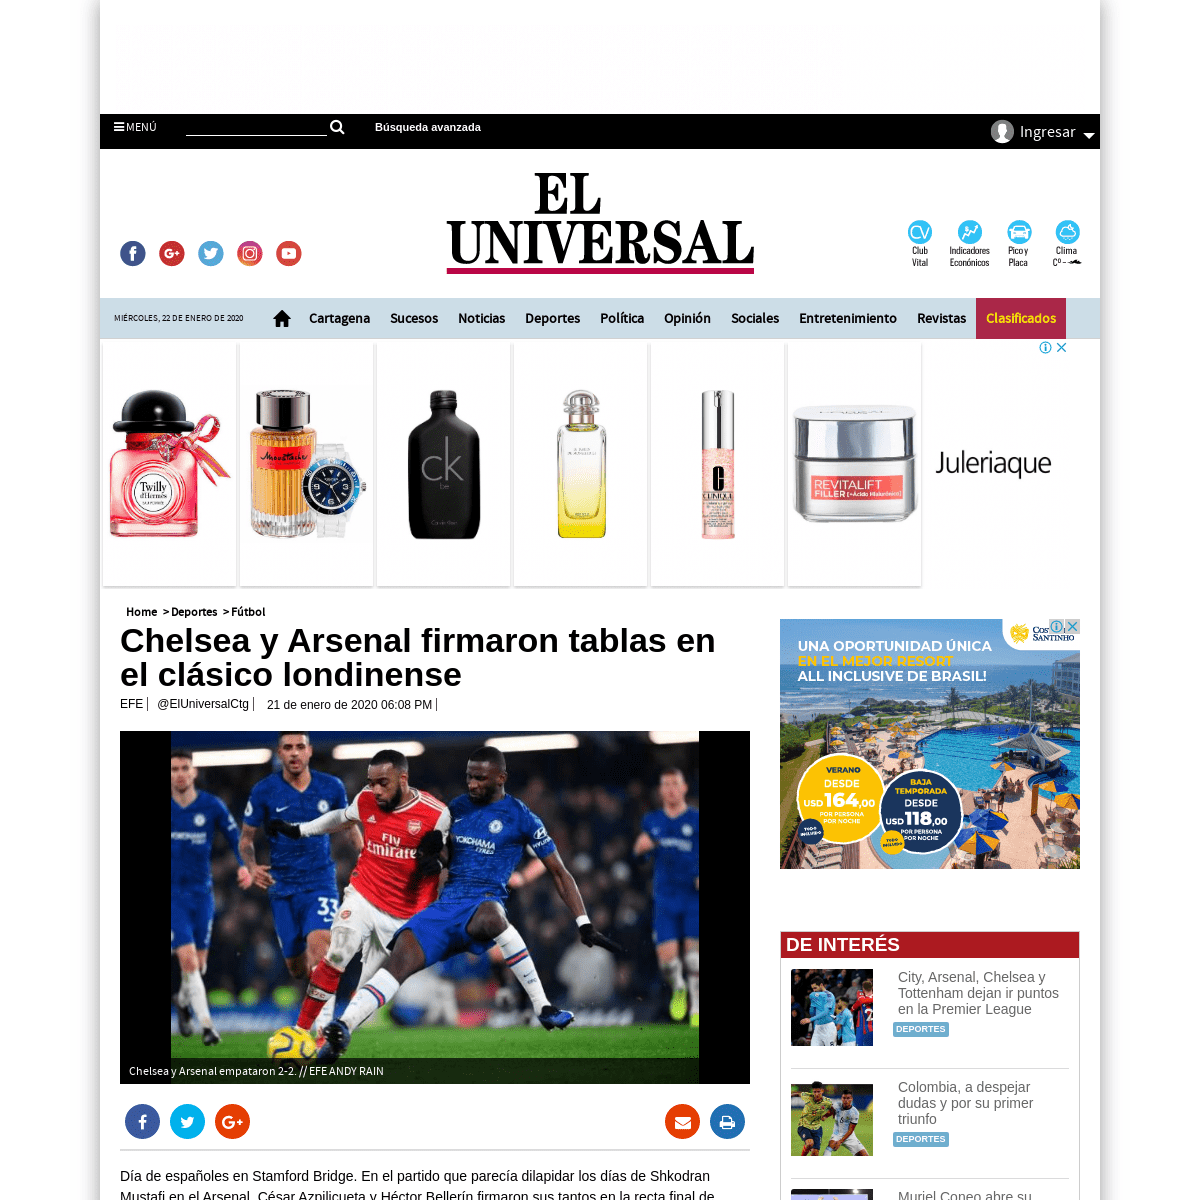 A complete backup of www.eluniversal.com.co/deportes/futbol/chelsea-y-arsenal-firmaron-tablas-en-el-clasico-londinense-BF2272740